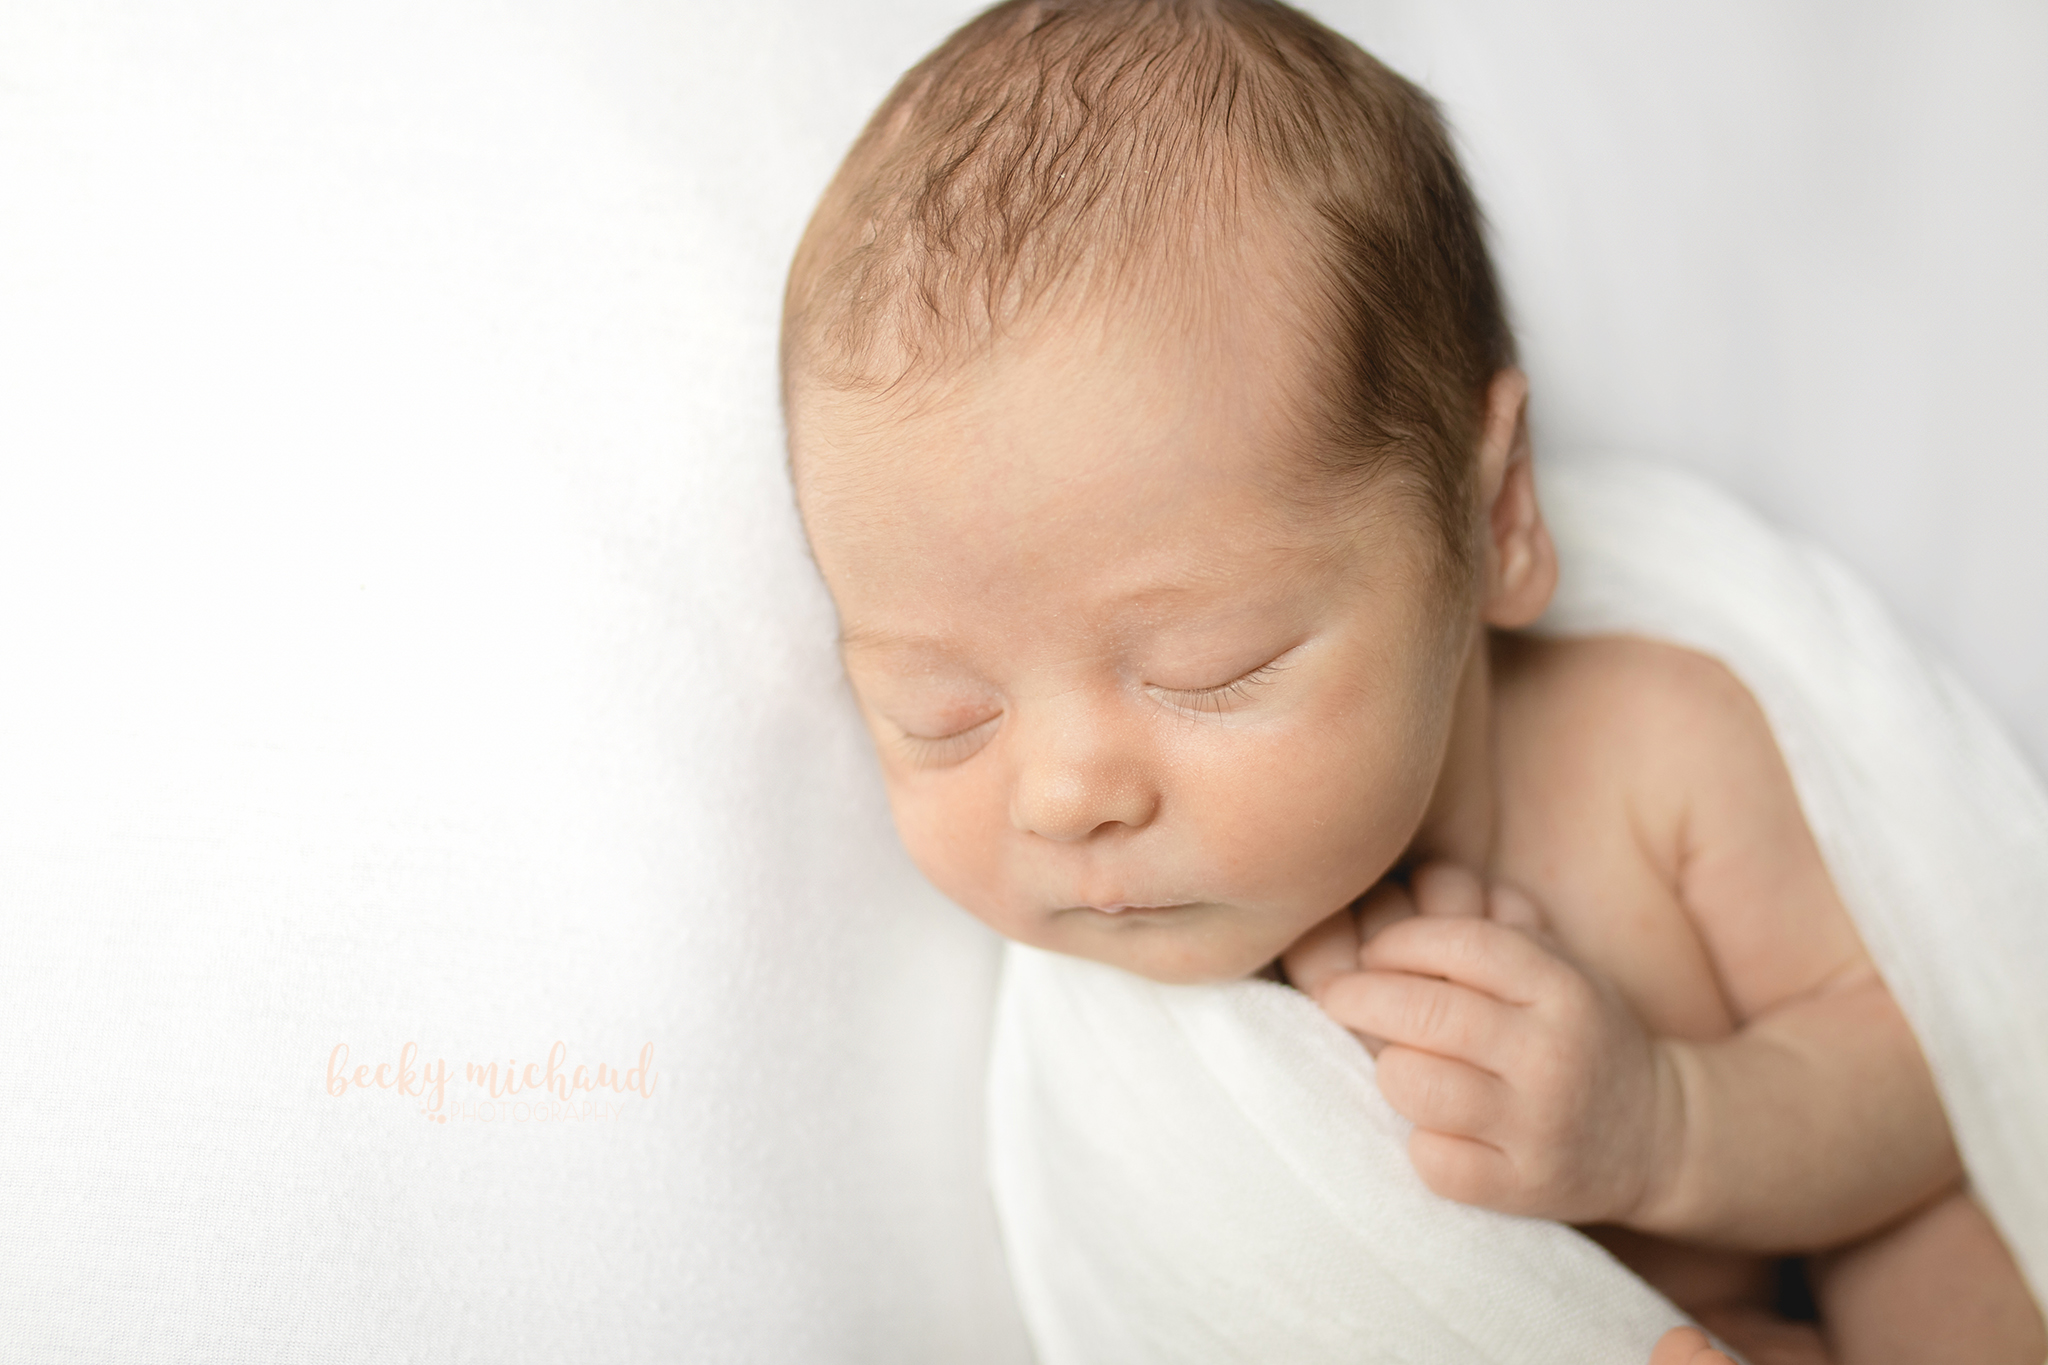 Becky Michaud Photography - Fort Collins -  Newborn Photographer